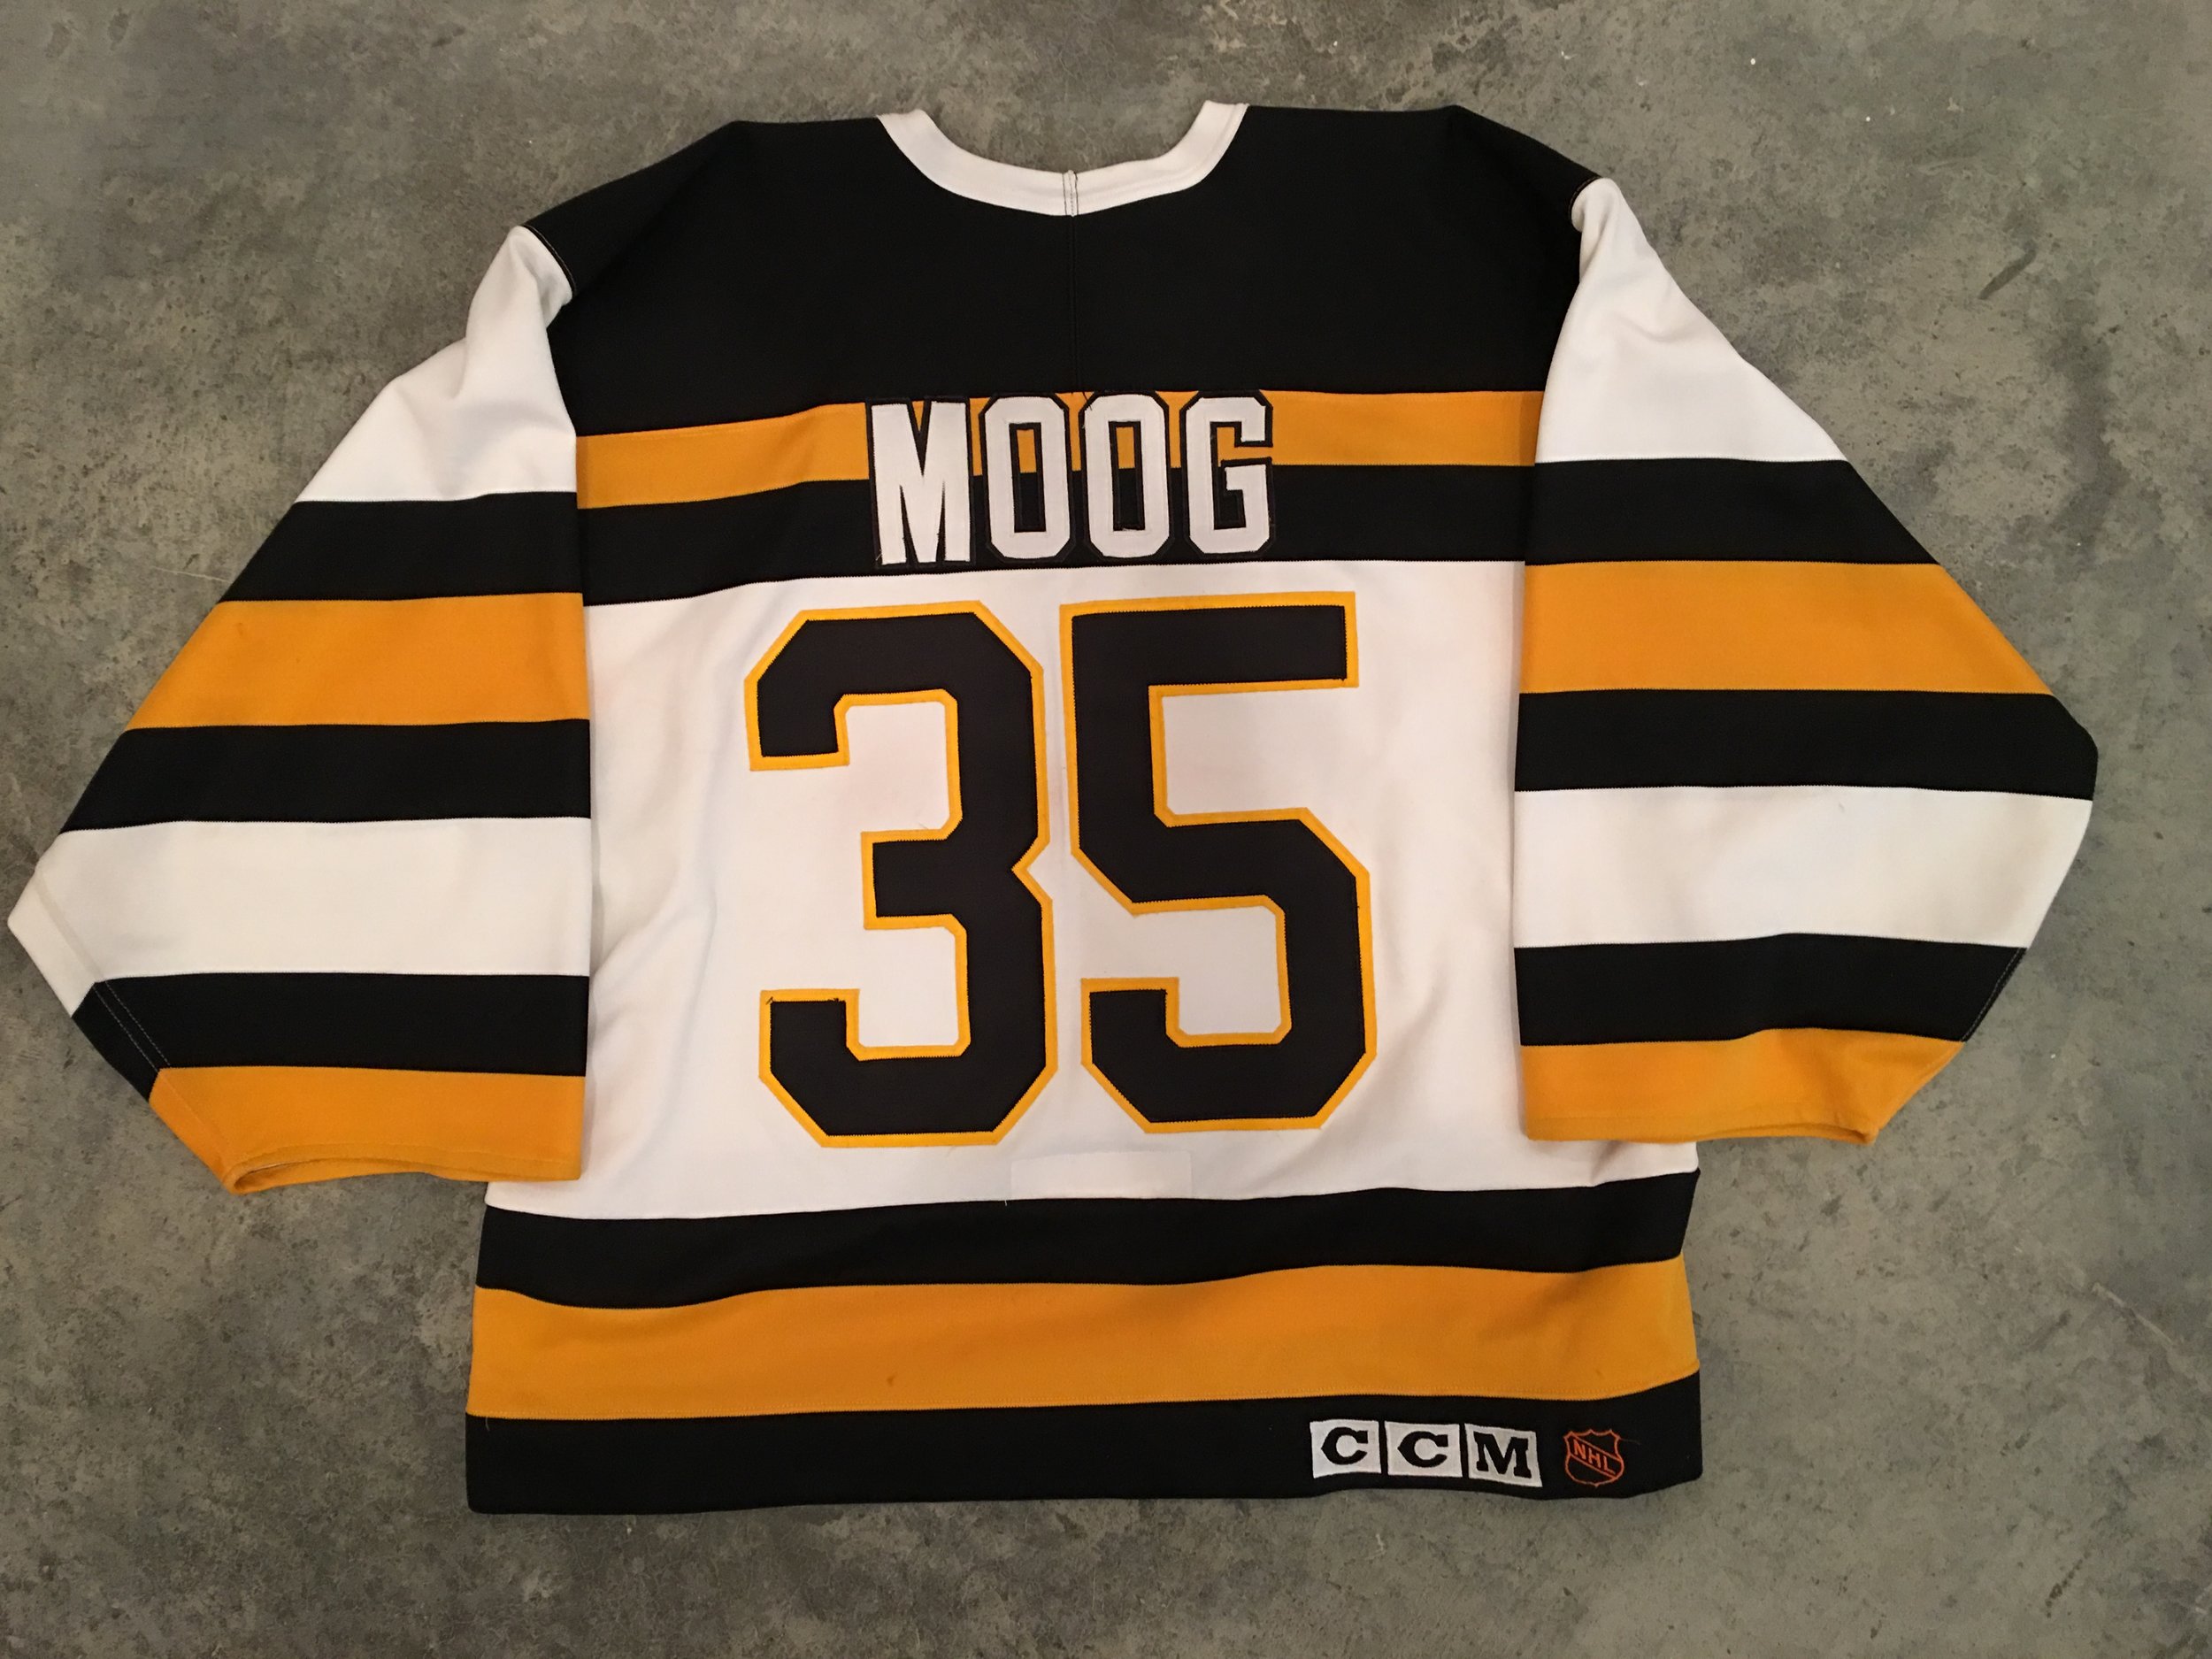 NHL Boston Bruins 1991-92 uniform and jersey original art